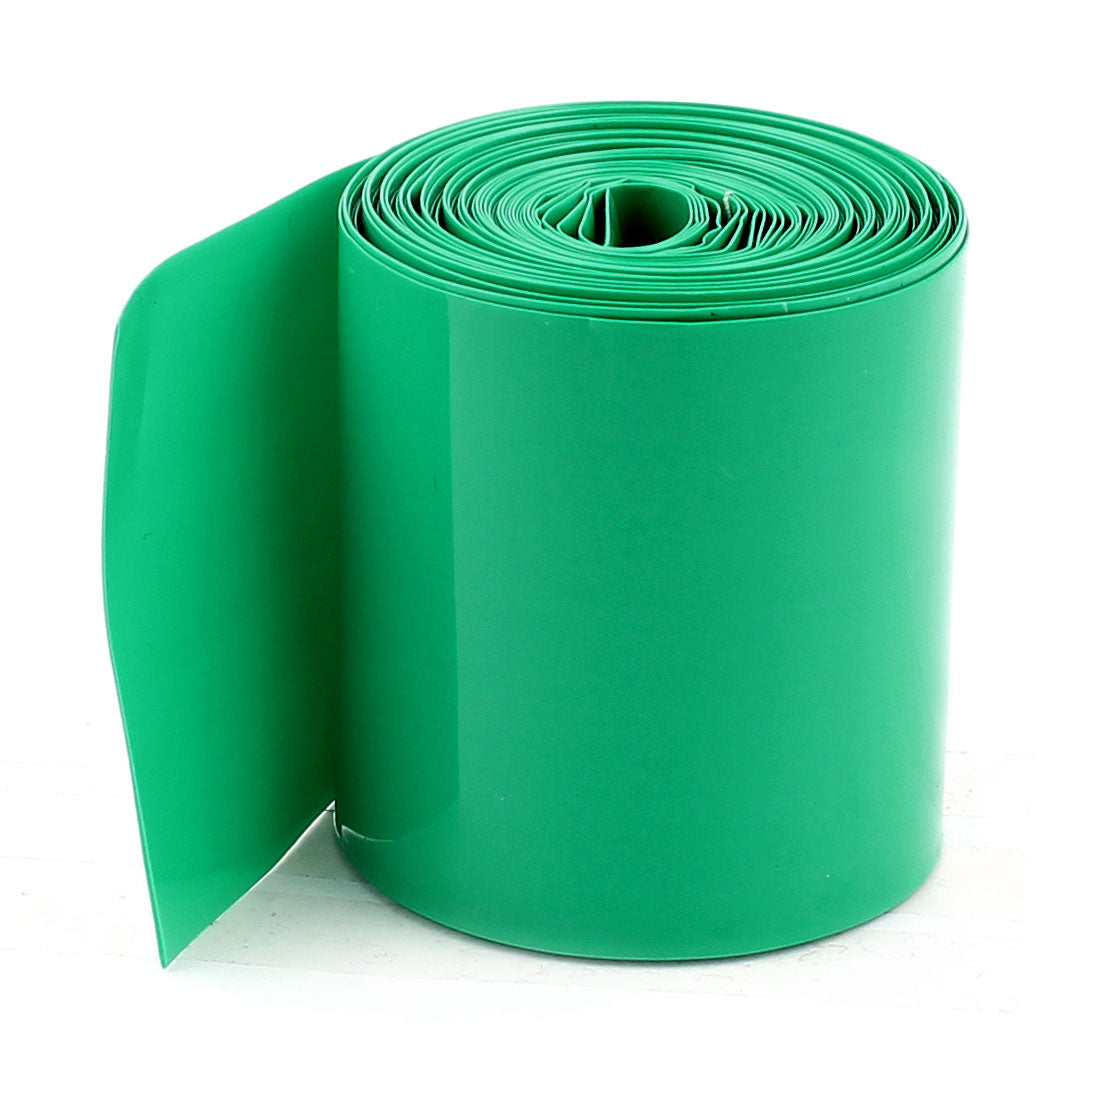 uxcell Uxcell 16Ft 5Meters Long 50mm Flat Width Dark Green PVC Heat Shrinkable Tubing Heatshrink Wrap Cover for Double 18650 Battery